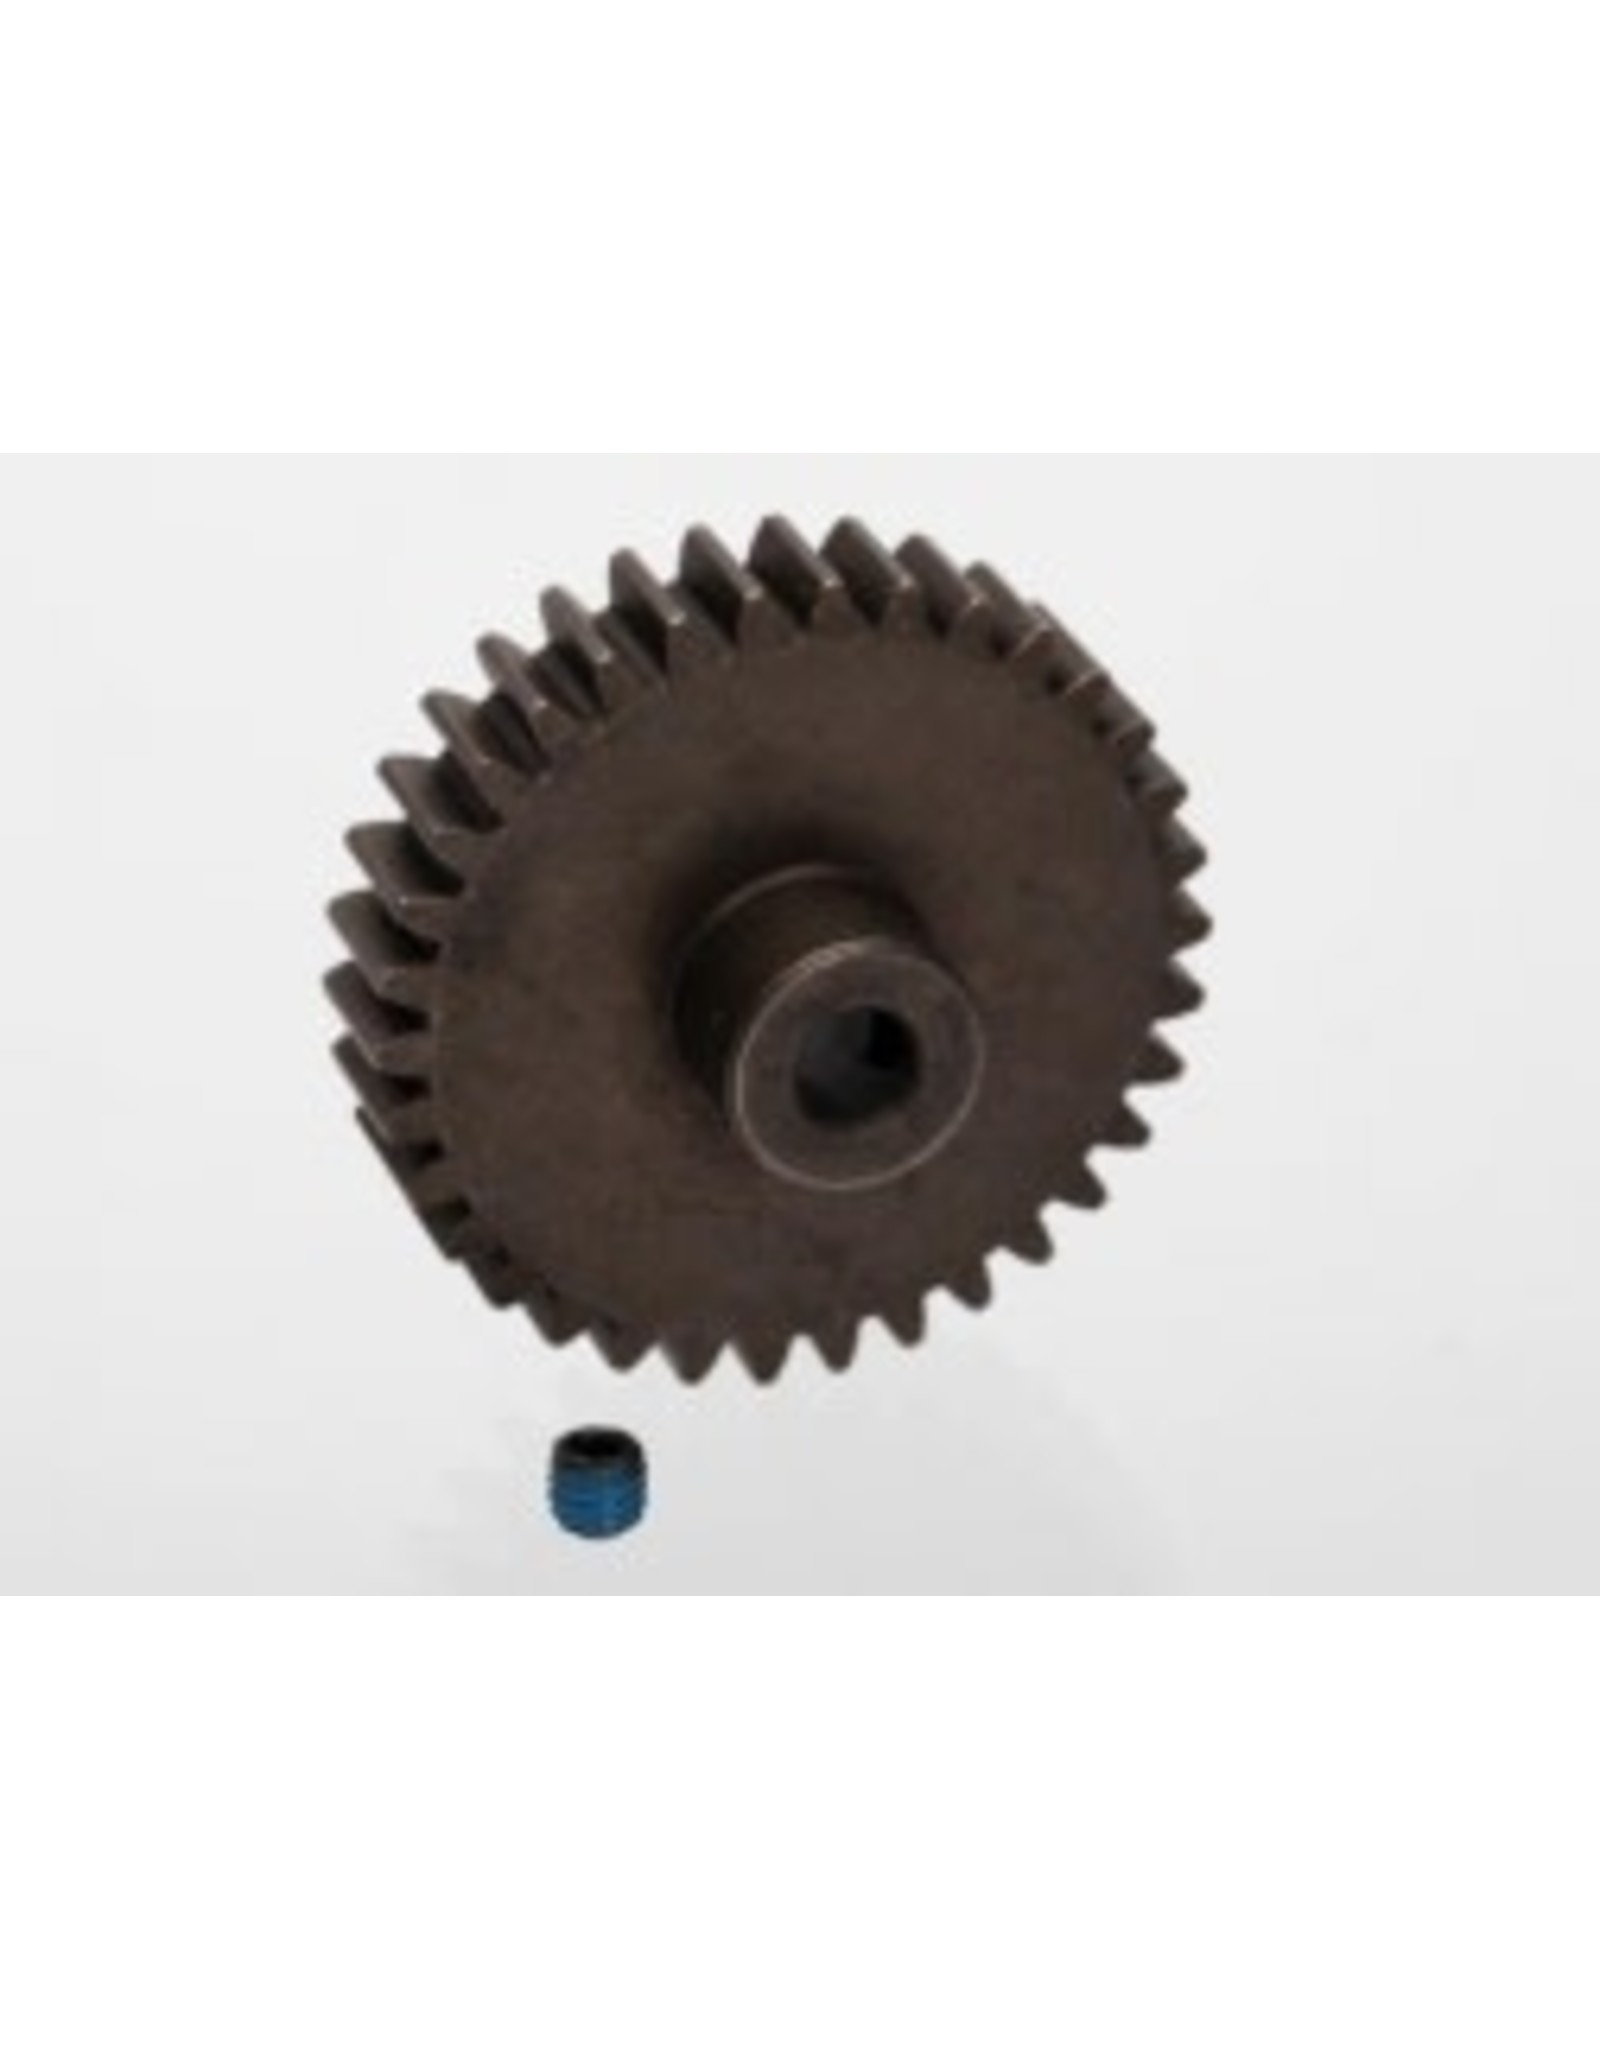 Traxxas Gear, 34-T pinion (1.0 metric pitch) (fits 5mm shaft)/ set screw